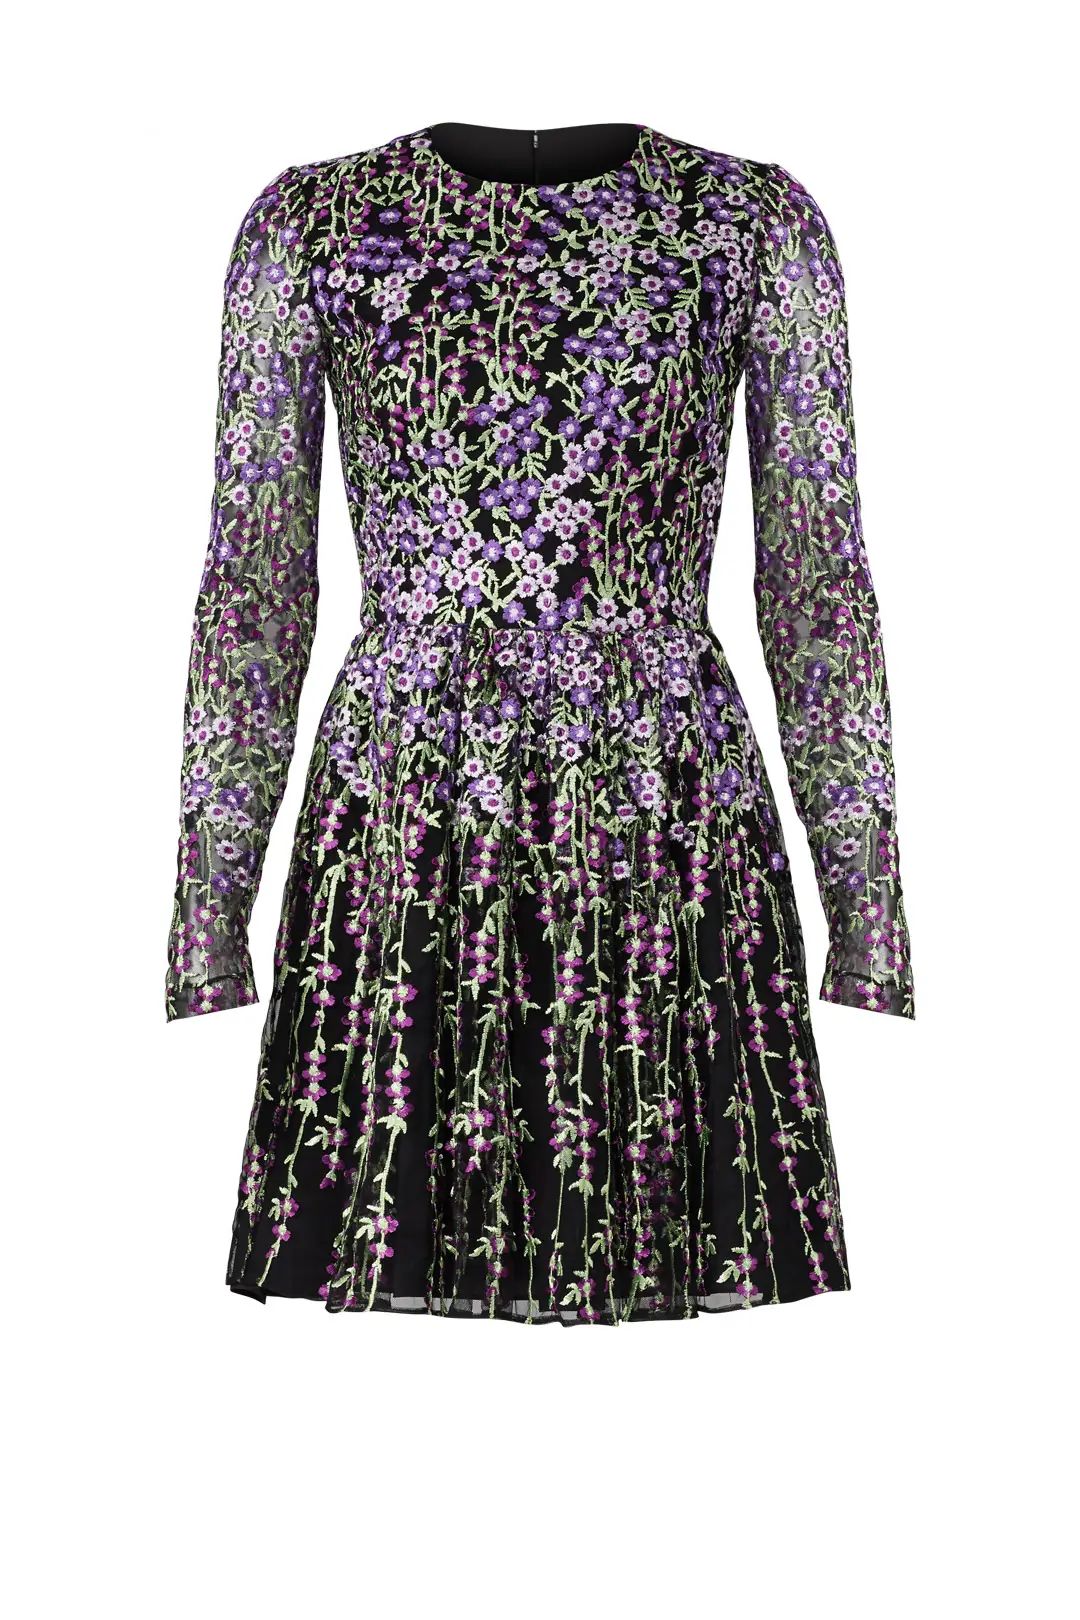 Badgley Mischka Purple Floral Dress | Rent The Runway